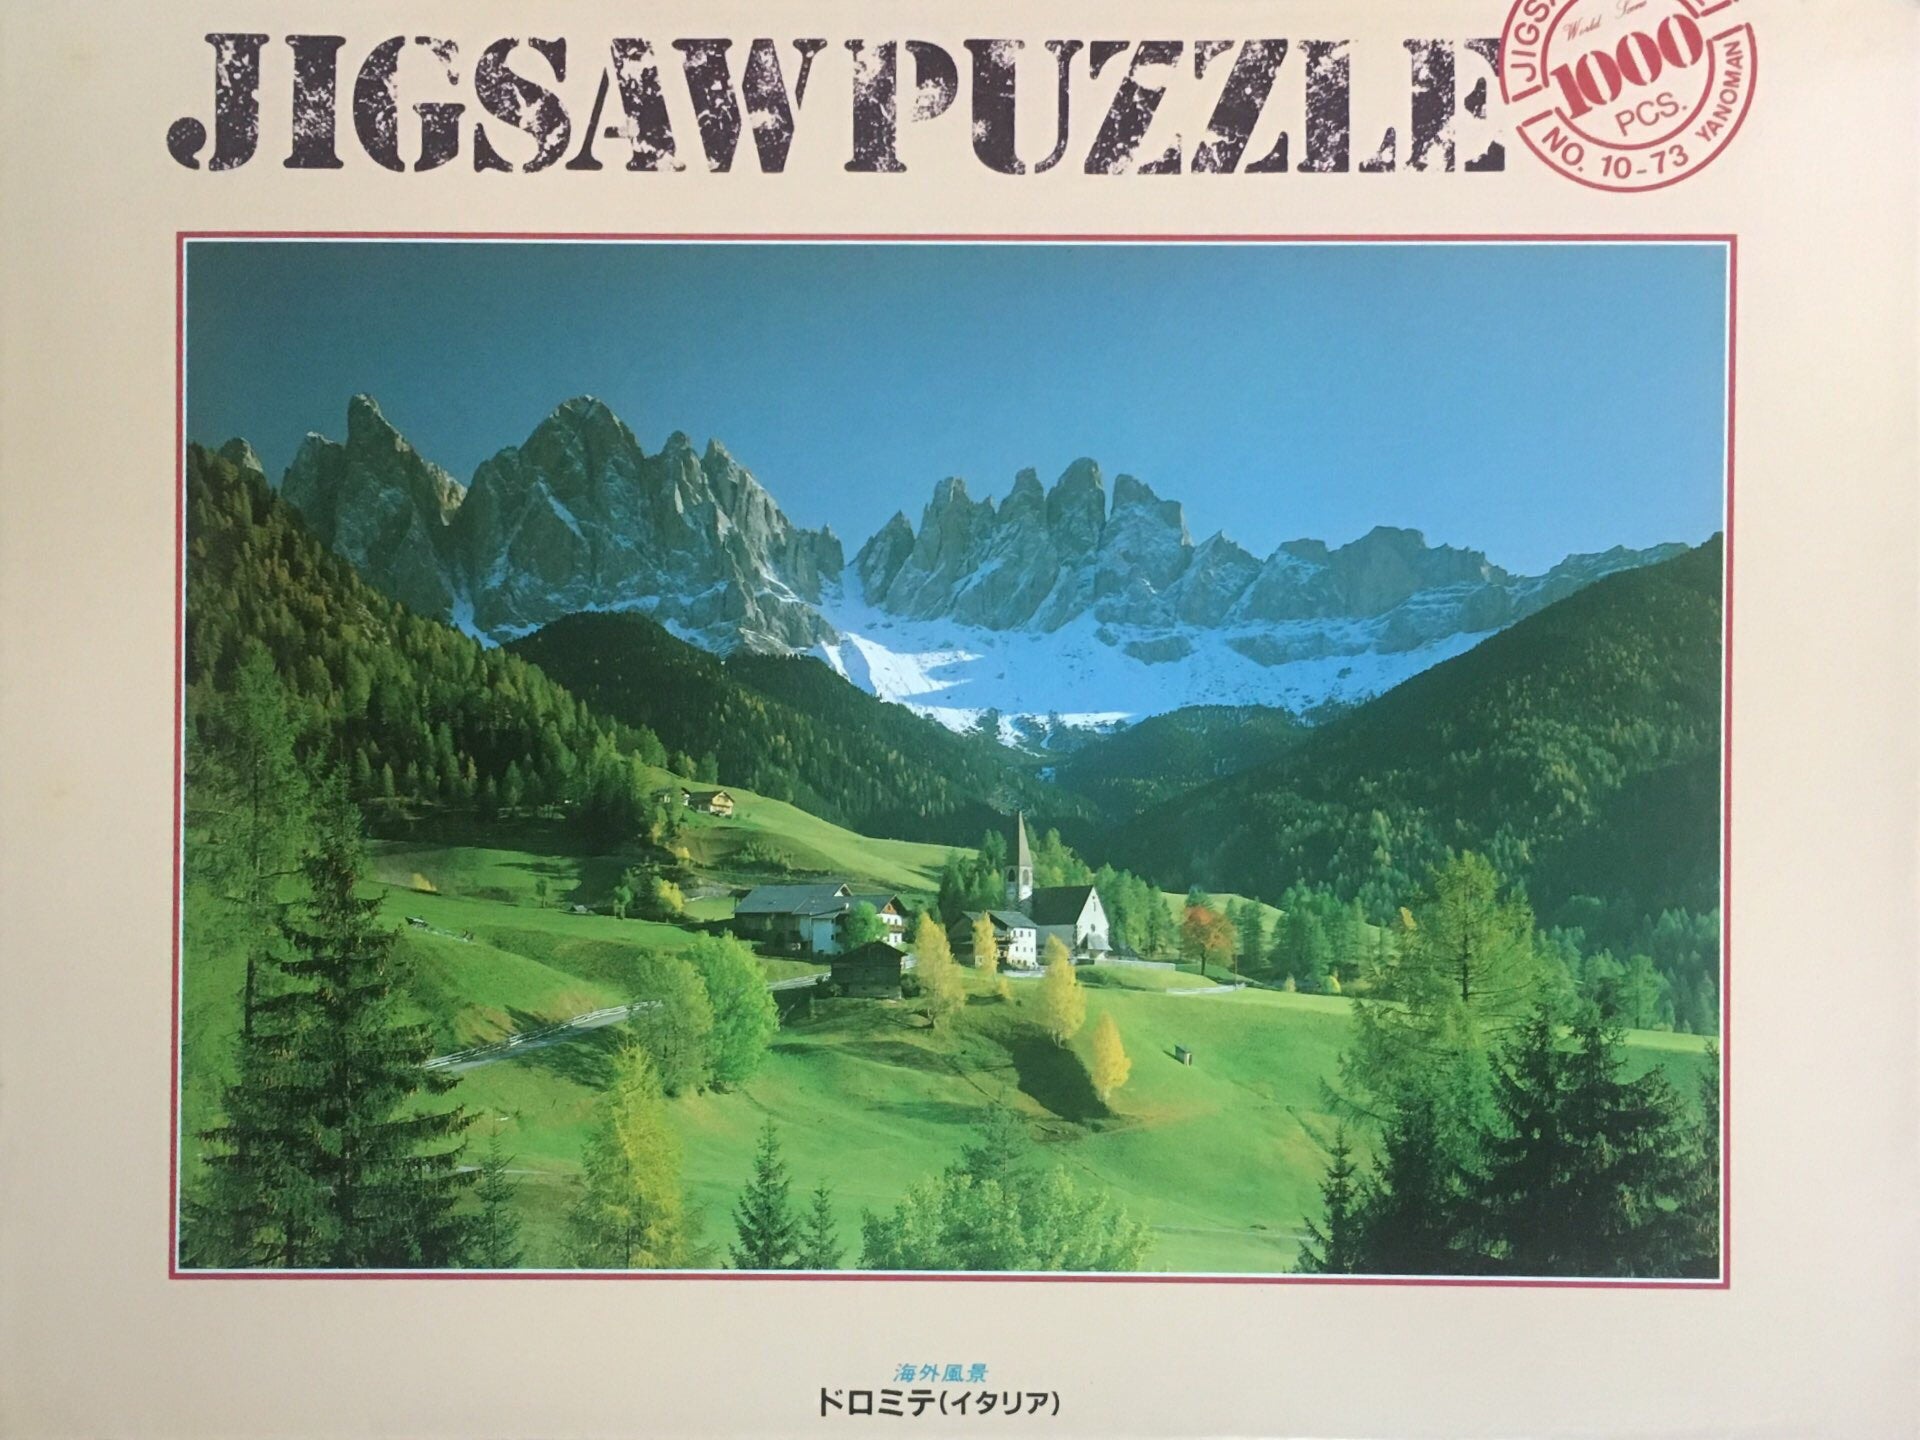 Italian Dolomite Mountains - jigsaw puzzle 1,000 pieces